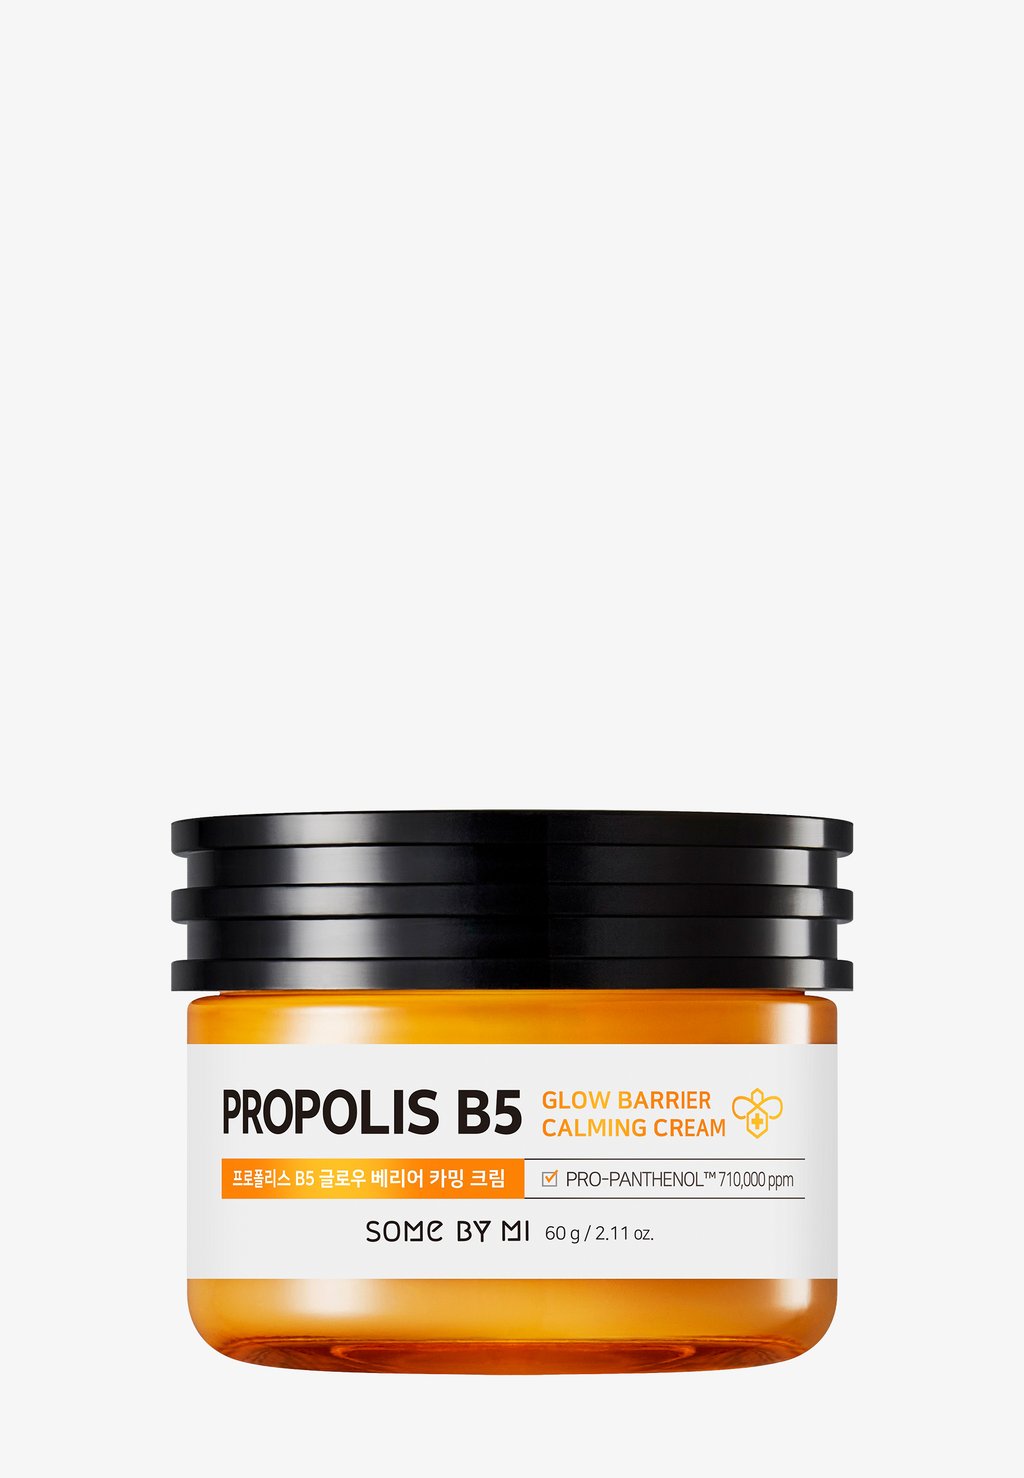 Дневной крем Propolis B5 Glow Barrier Calming Cream SOME BY MI